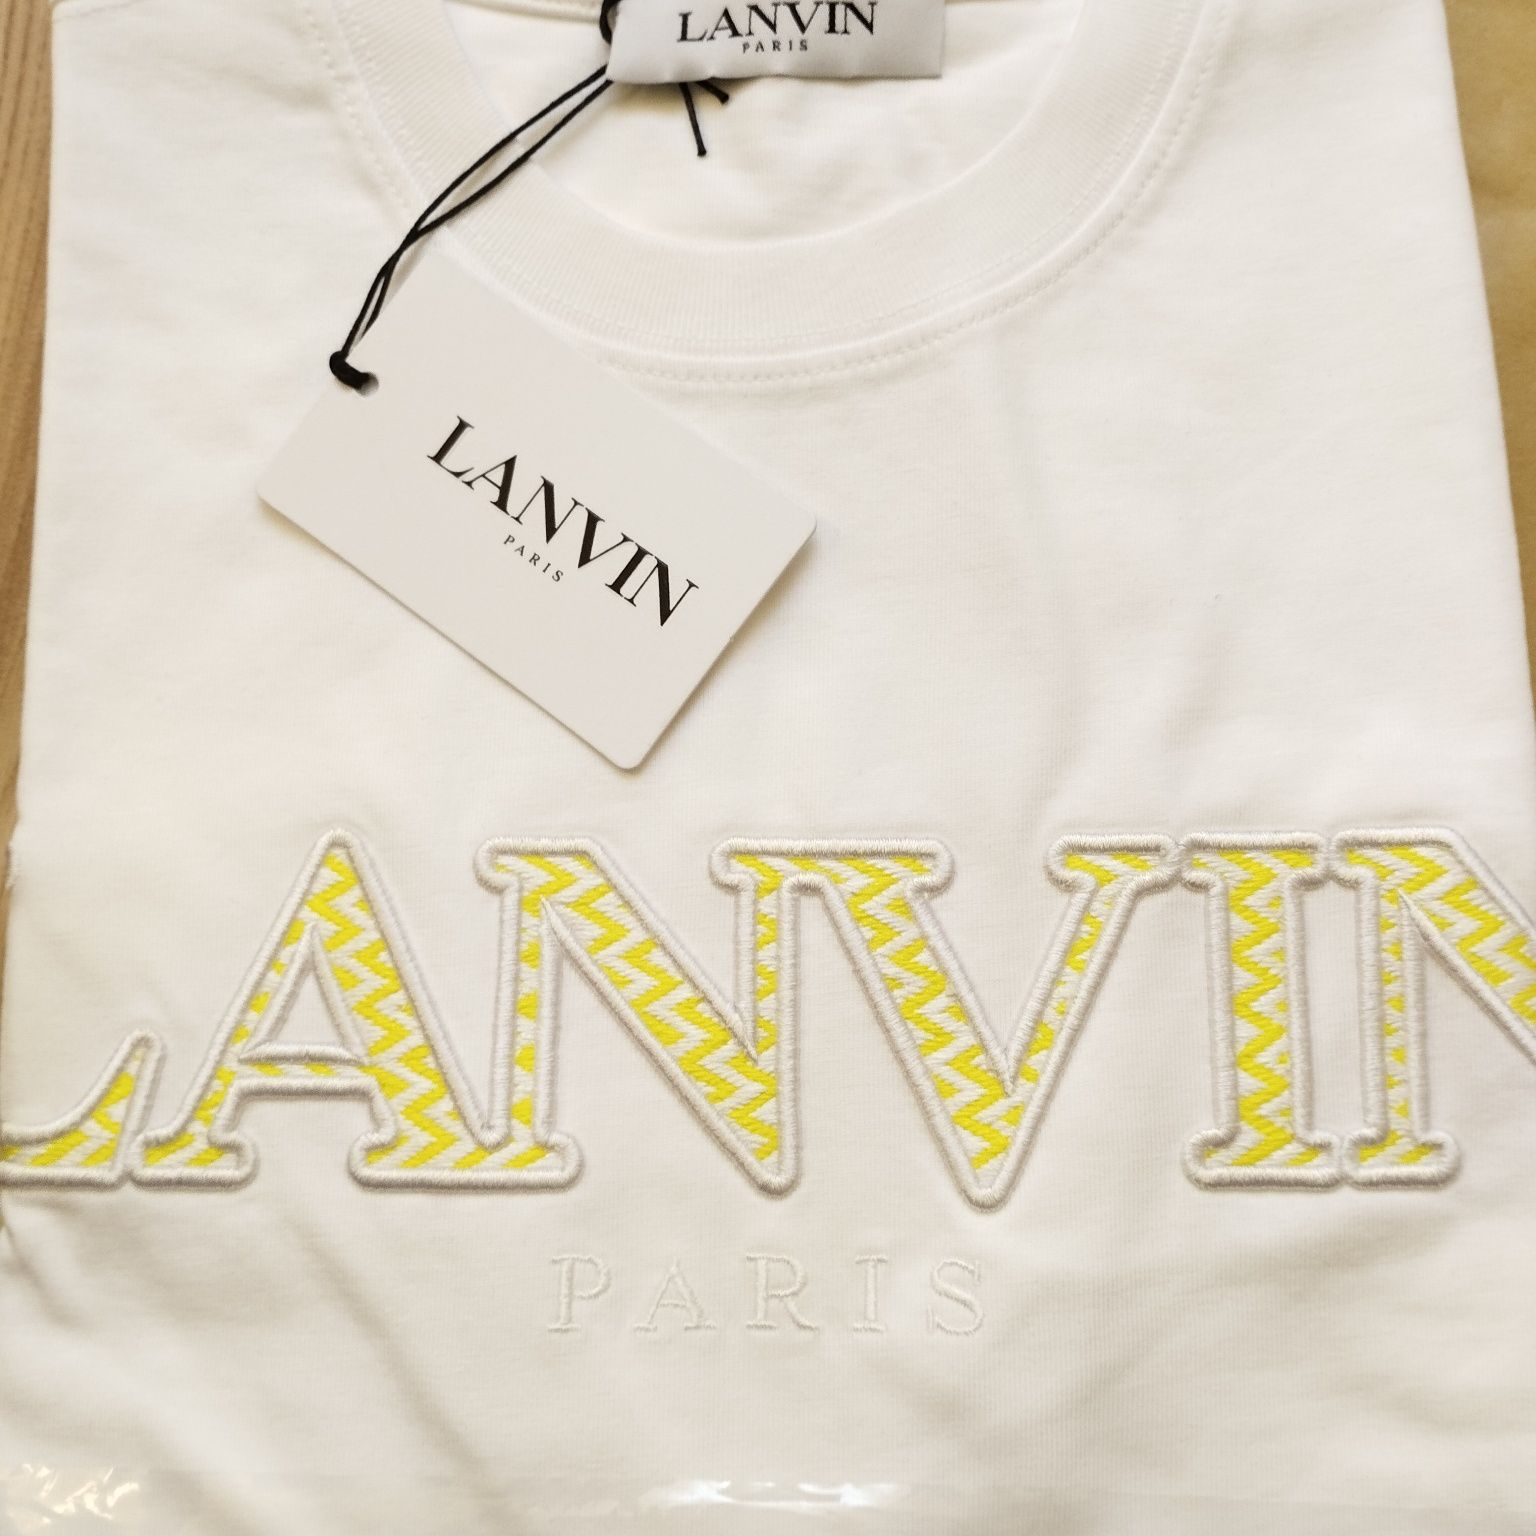 Тениска Casablanca,Loewe, Lanvin